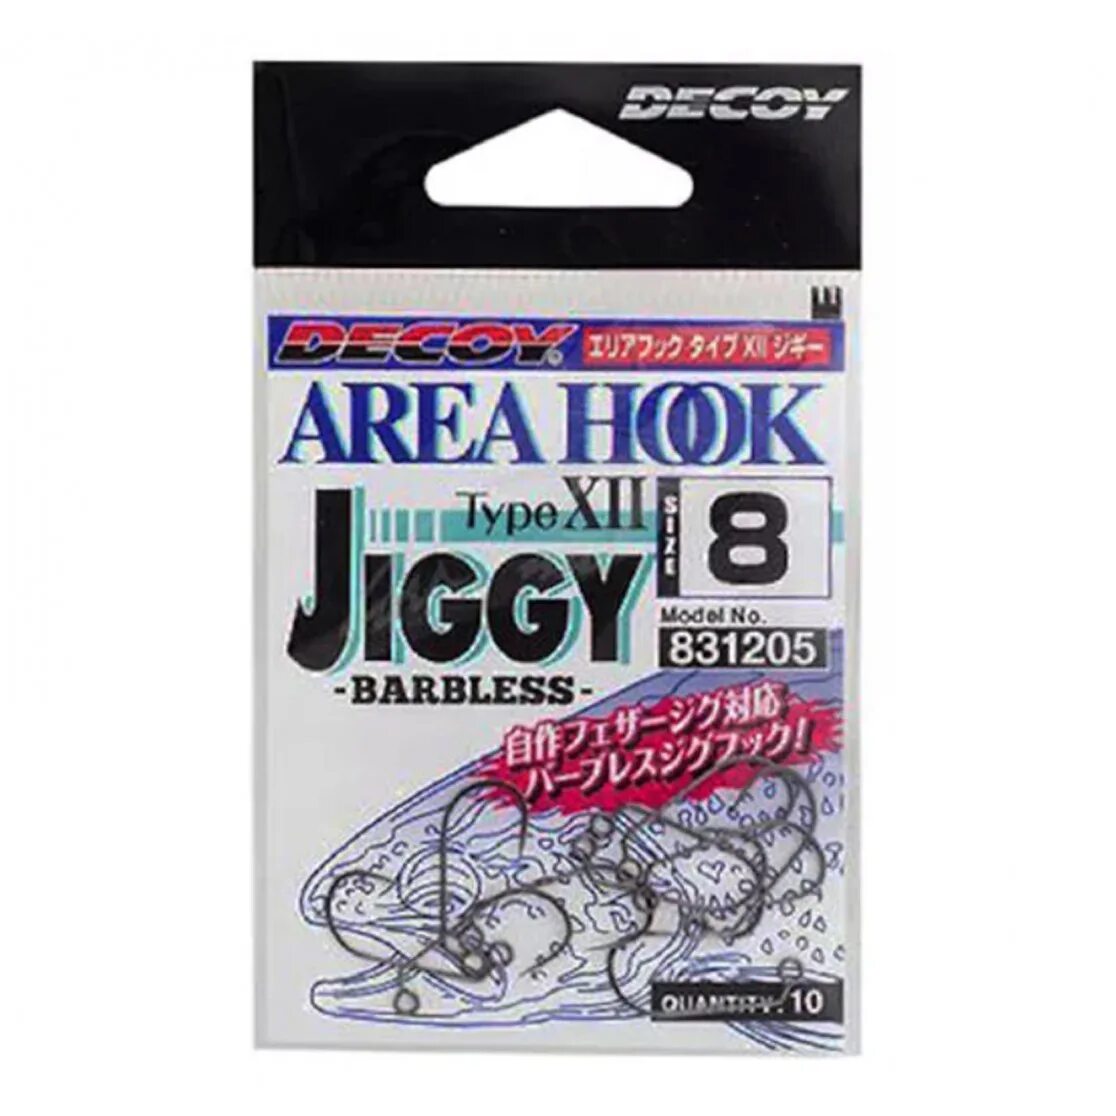 Area 12. Decoy area Hook Type XII Jiggy. Decoy Ah-12. Крючки офсет. Decoy area Hook Jiggy #4. Ah-12 area Hook Jiggy.